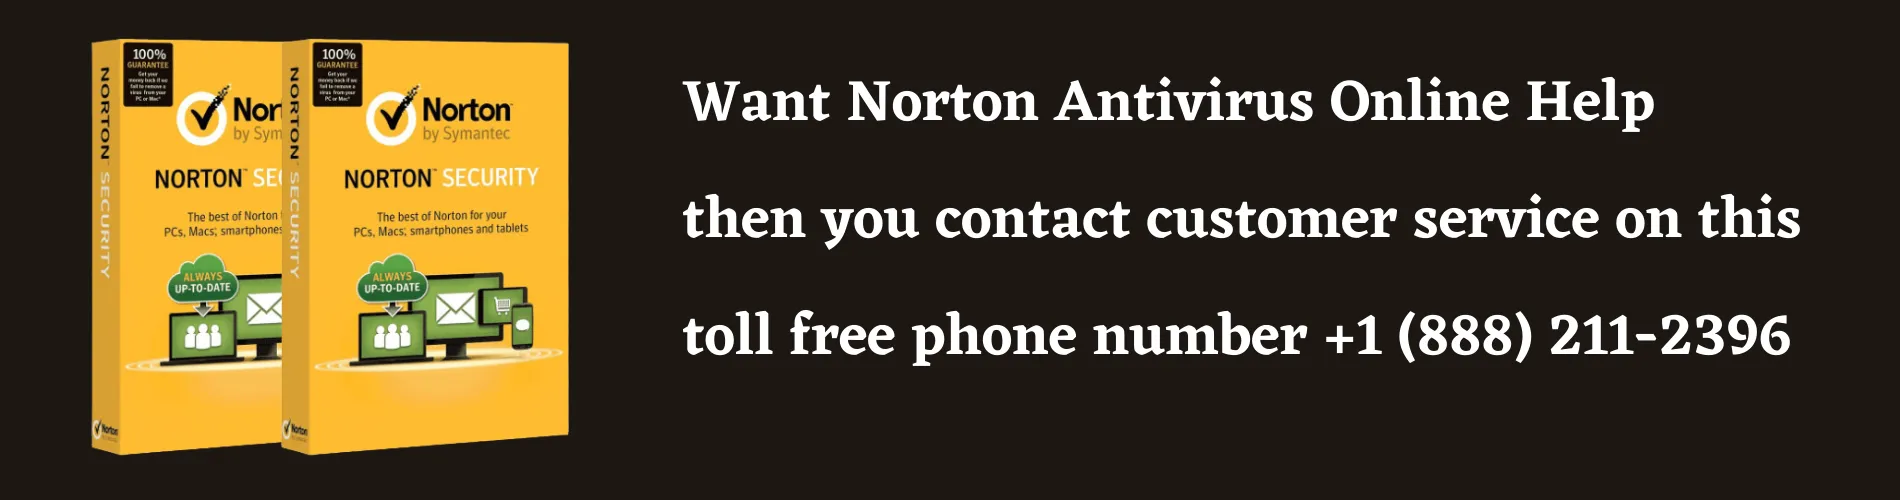 Norton Support Service